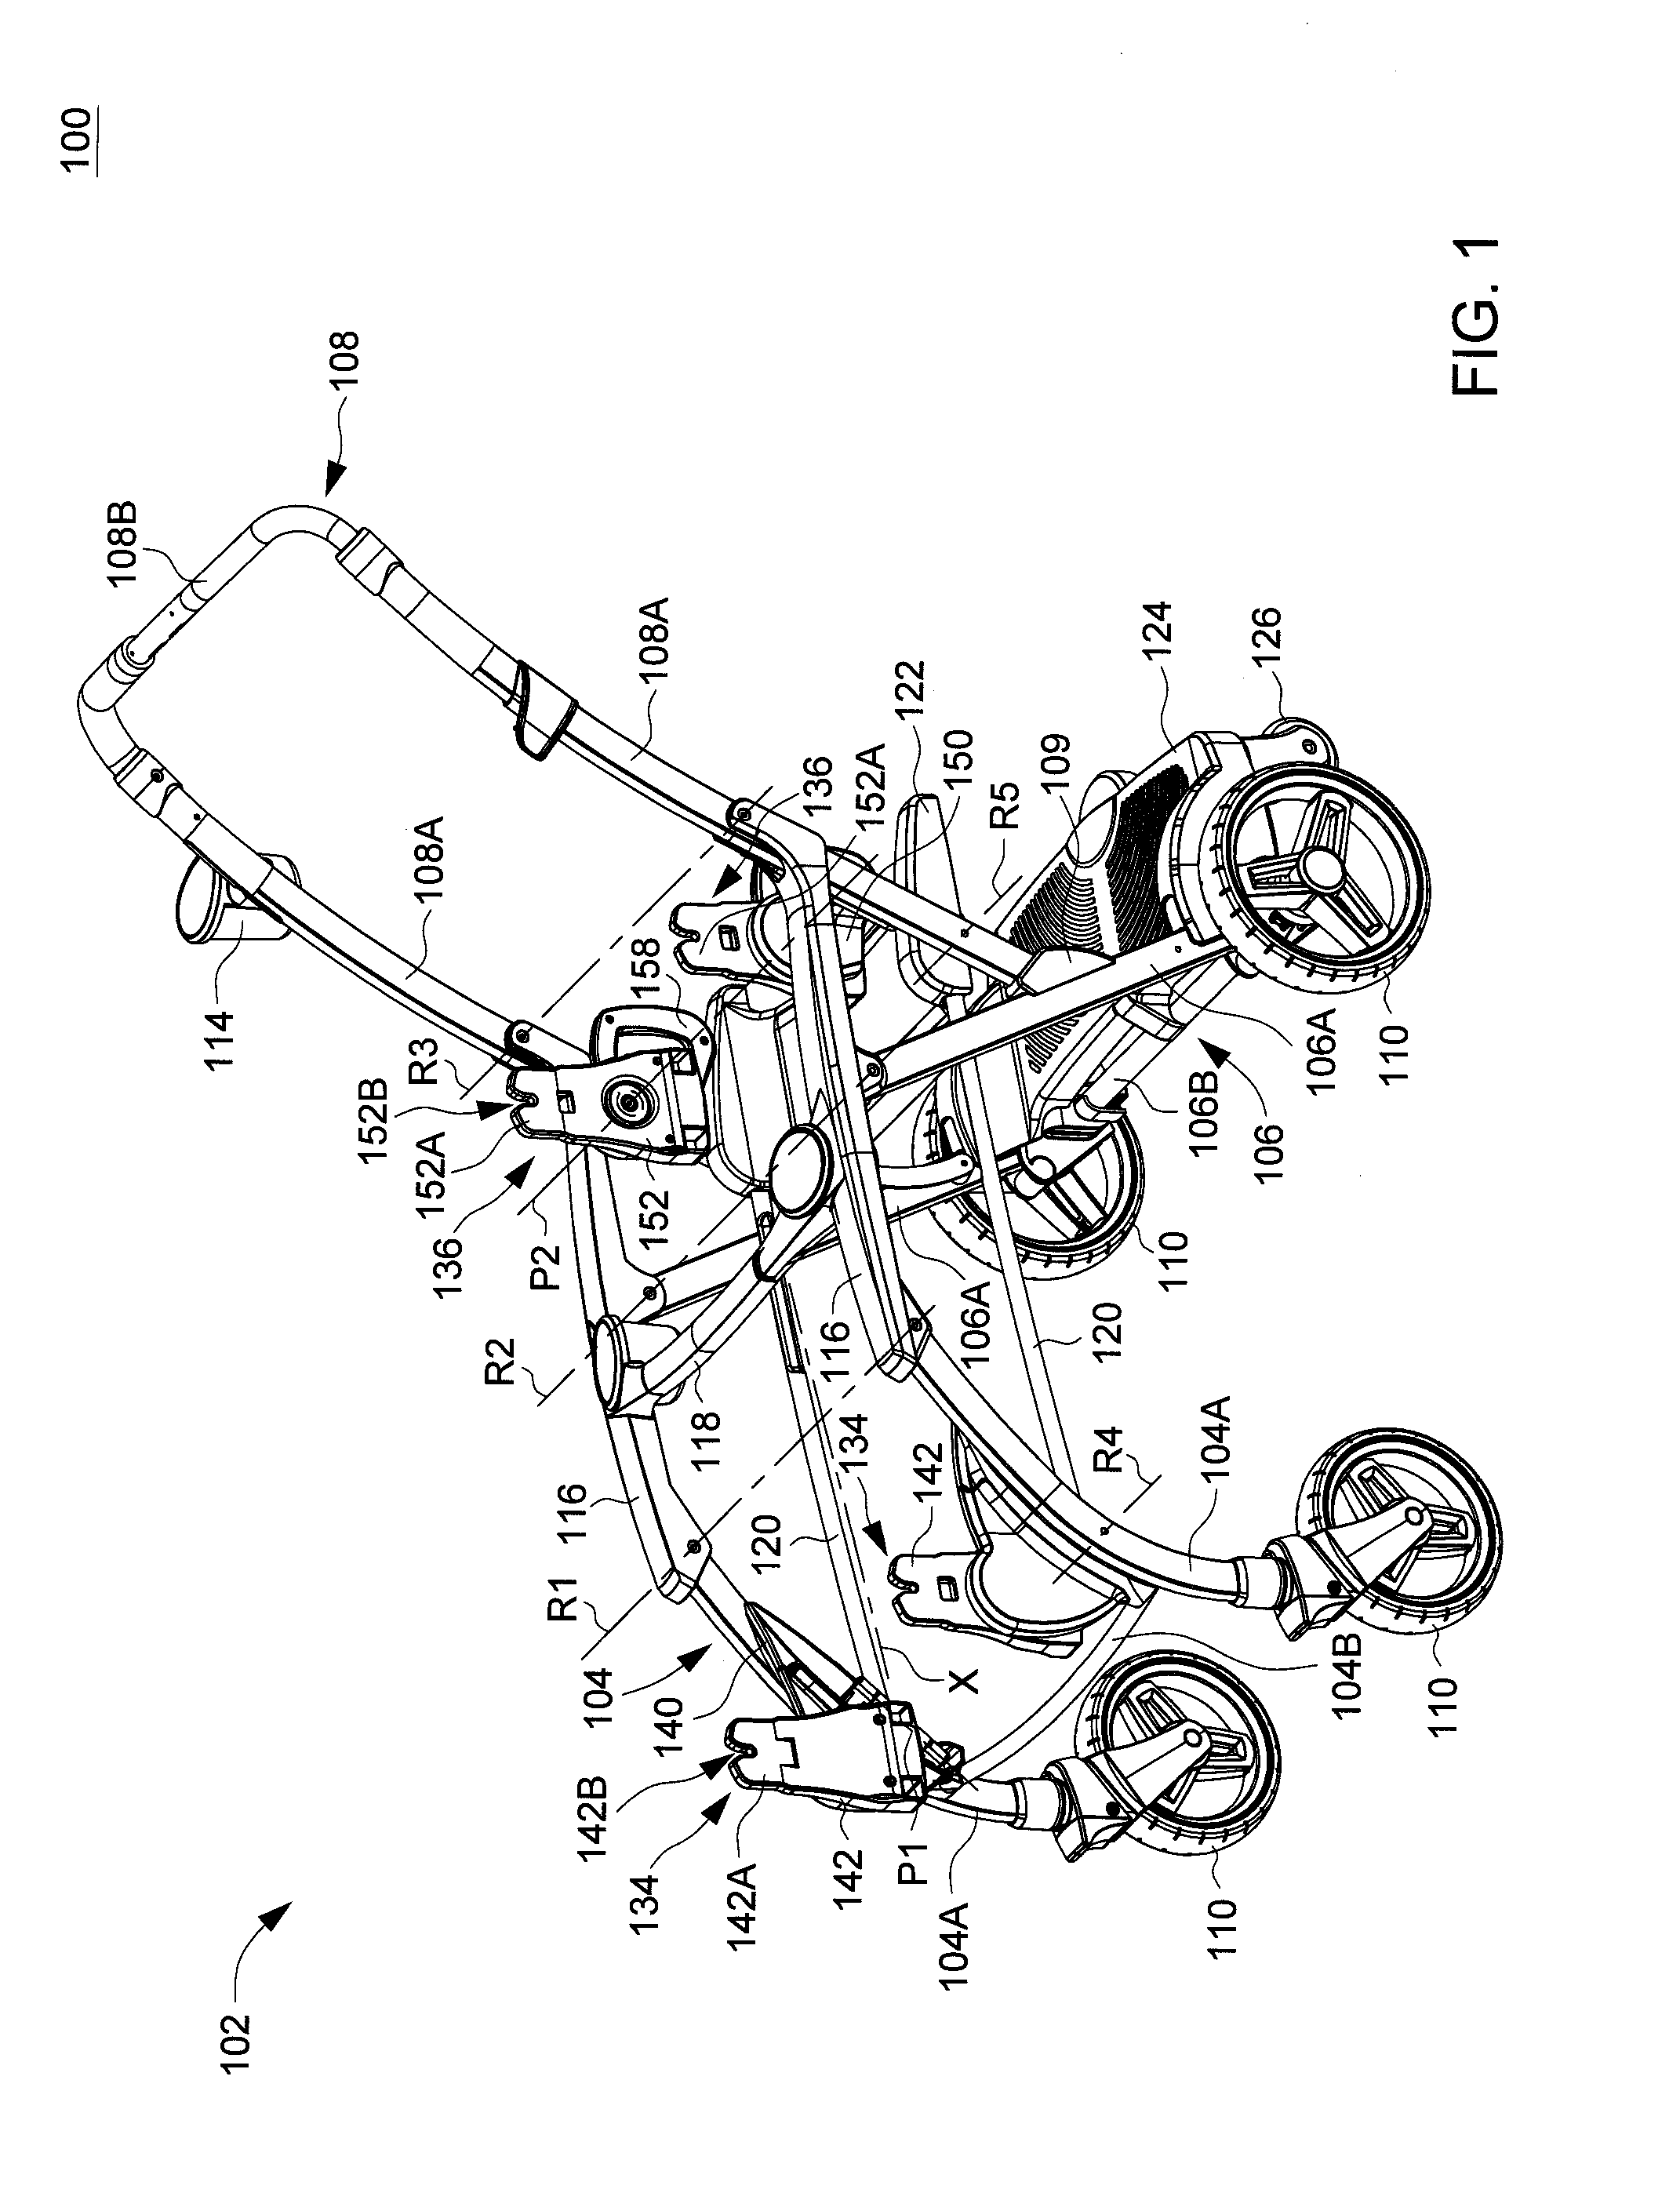 Infant stroller apparatus